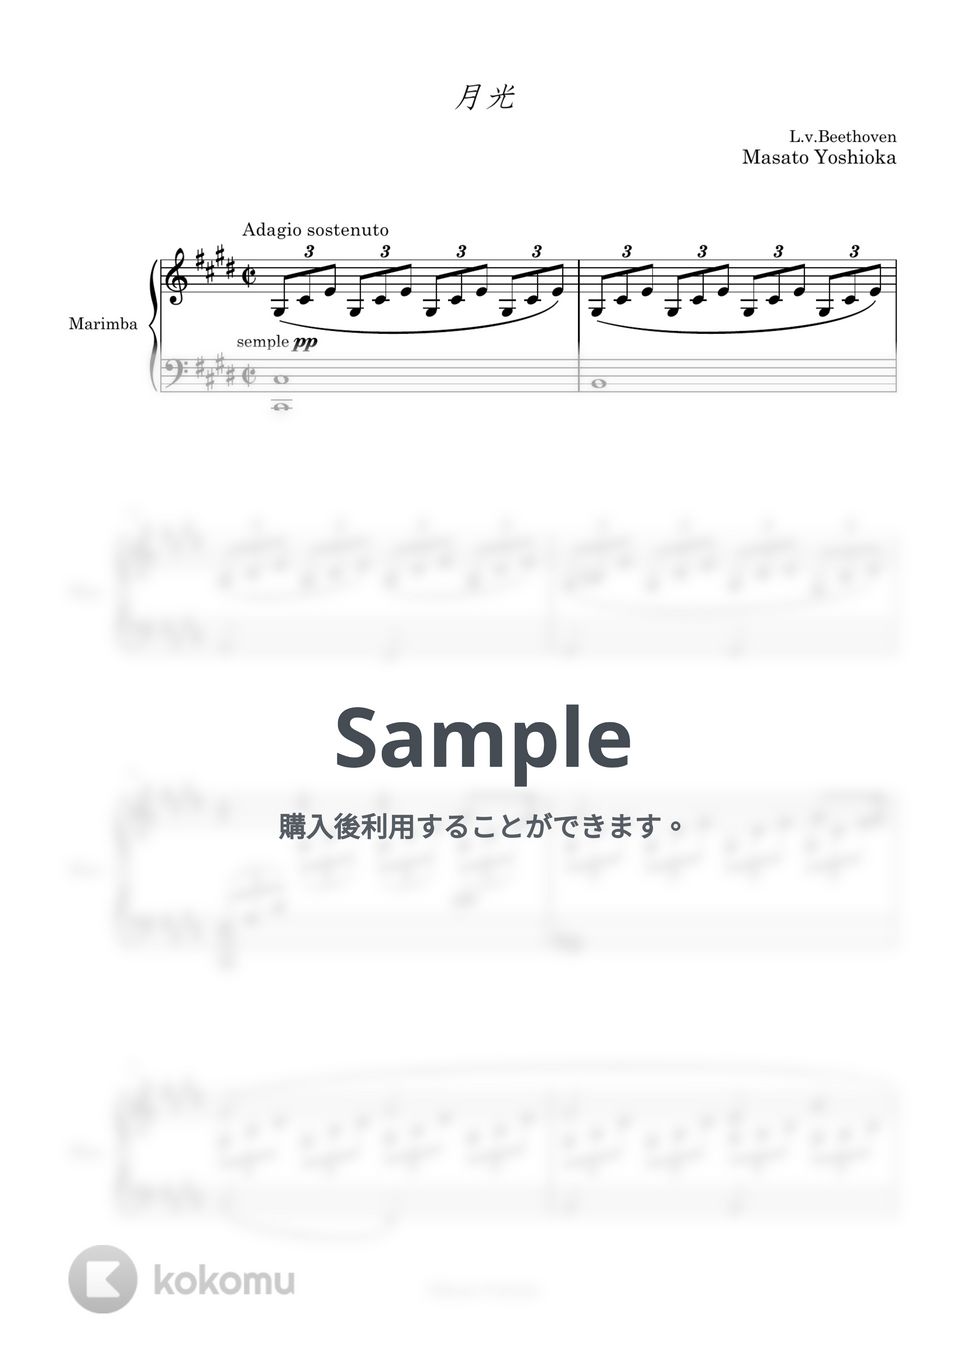 L.v.Beethoven - 月光 (マリンバソロ/無伴奏) by 吉岡雅人